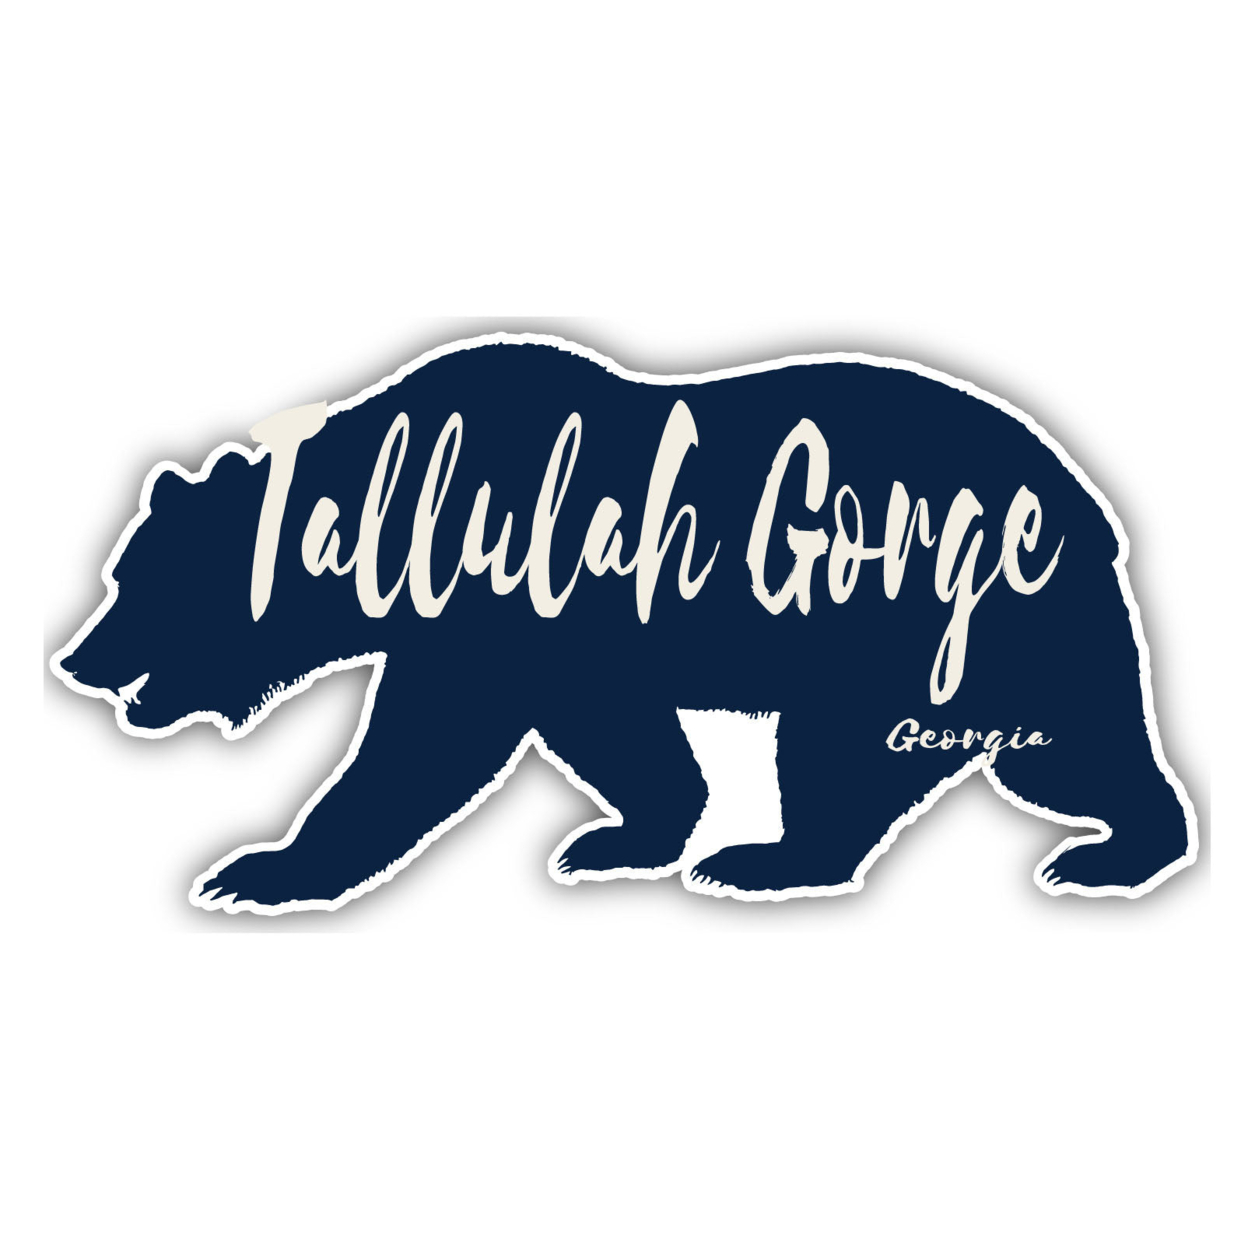 Tallulah Gorge Georgia Souvenir Decorative Stickers (Choose Theme And Size) - Single Unit, 4-Inch, Camp Life